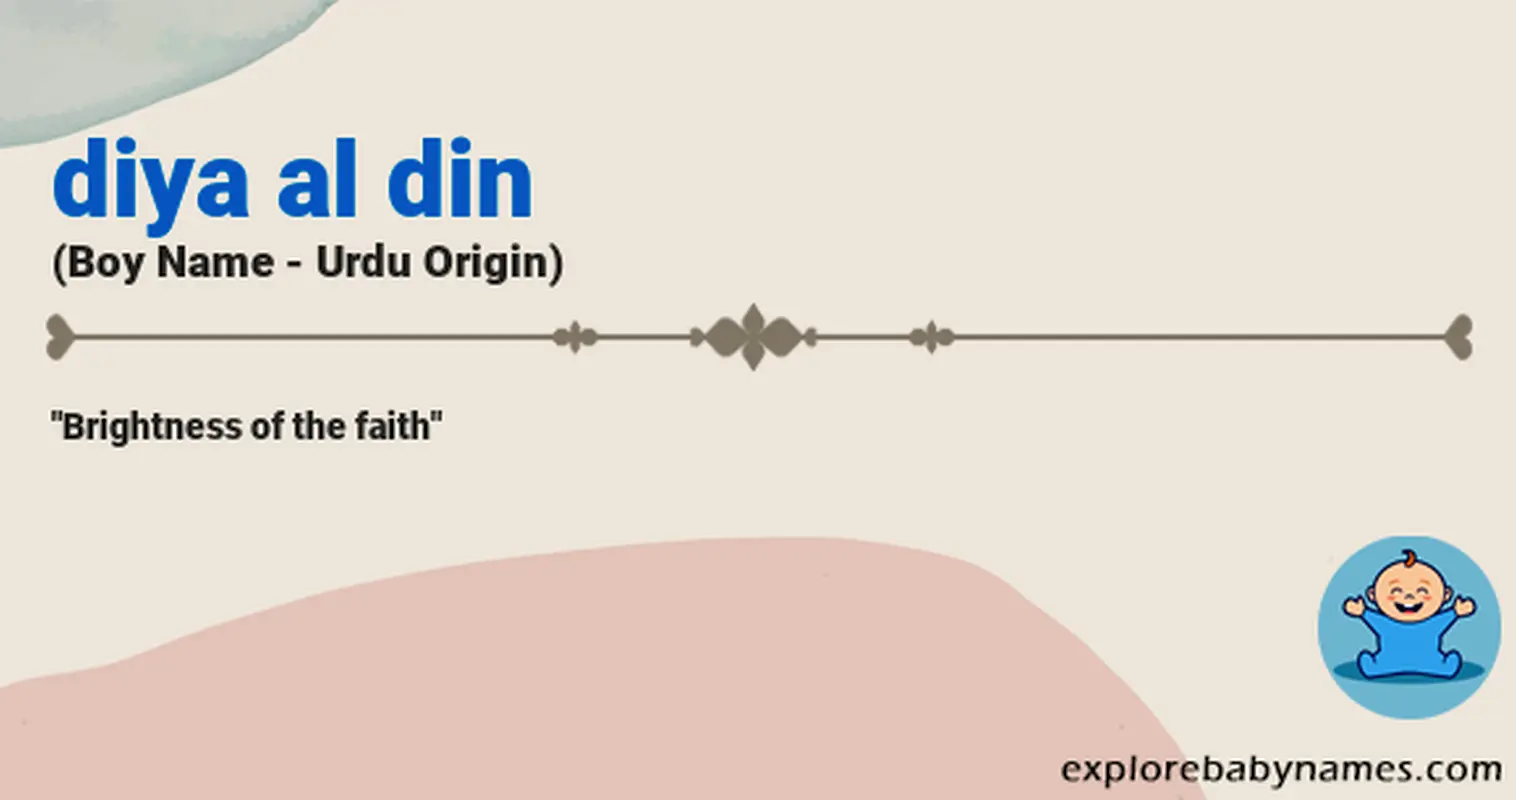 Meaning of Diya al din